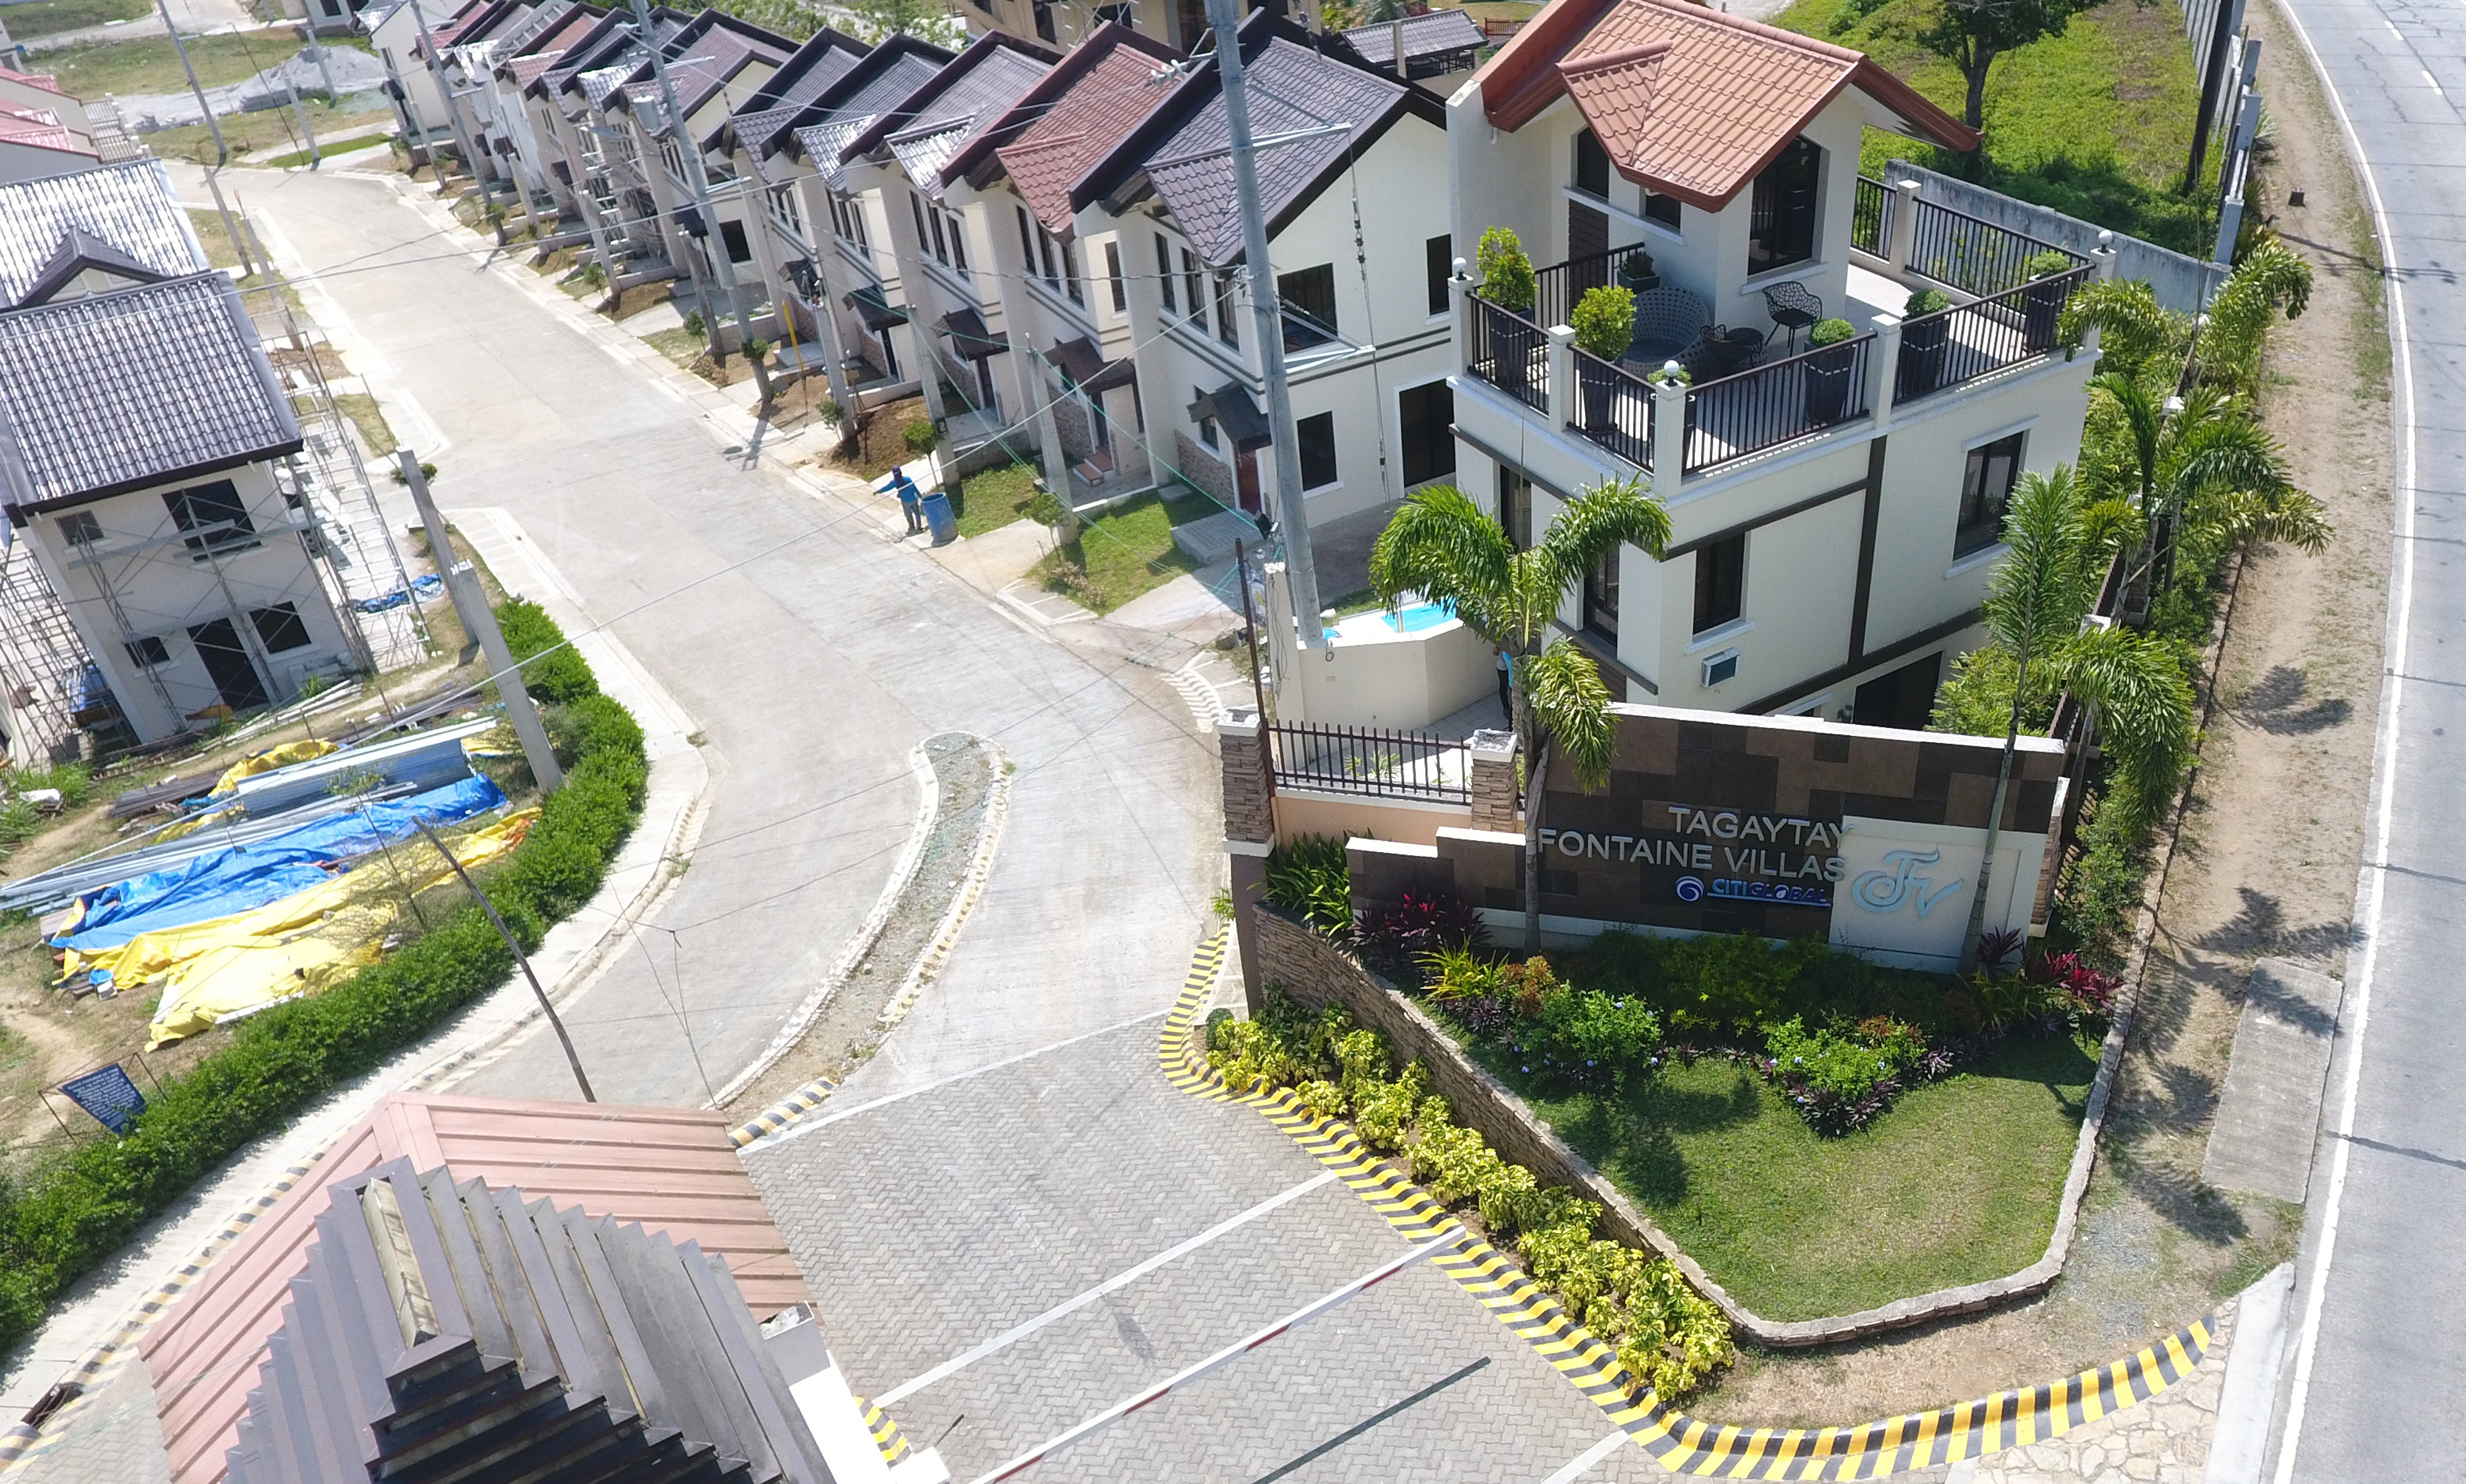 Drone shot of Tagaytay Fontaine Villas